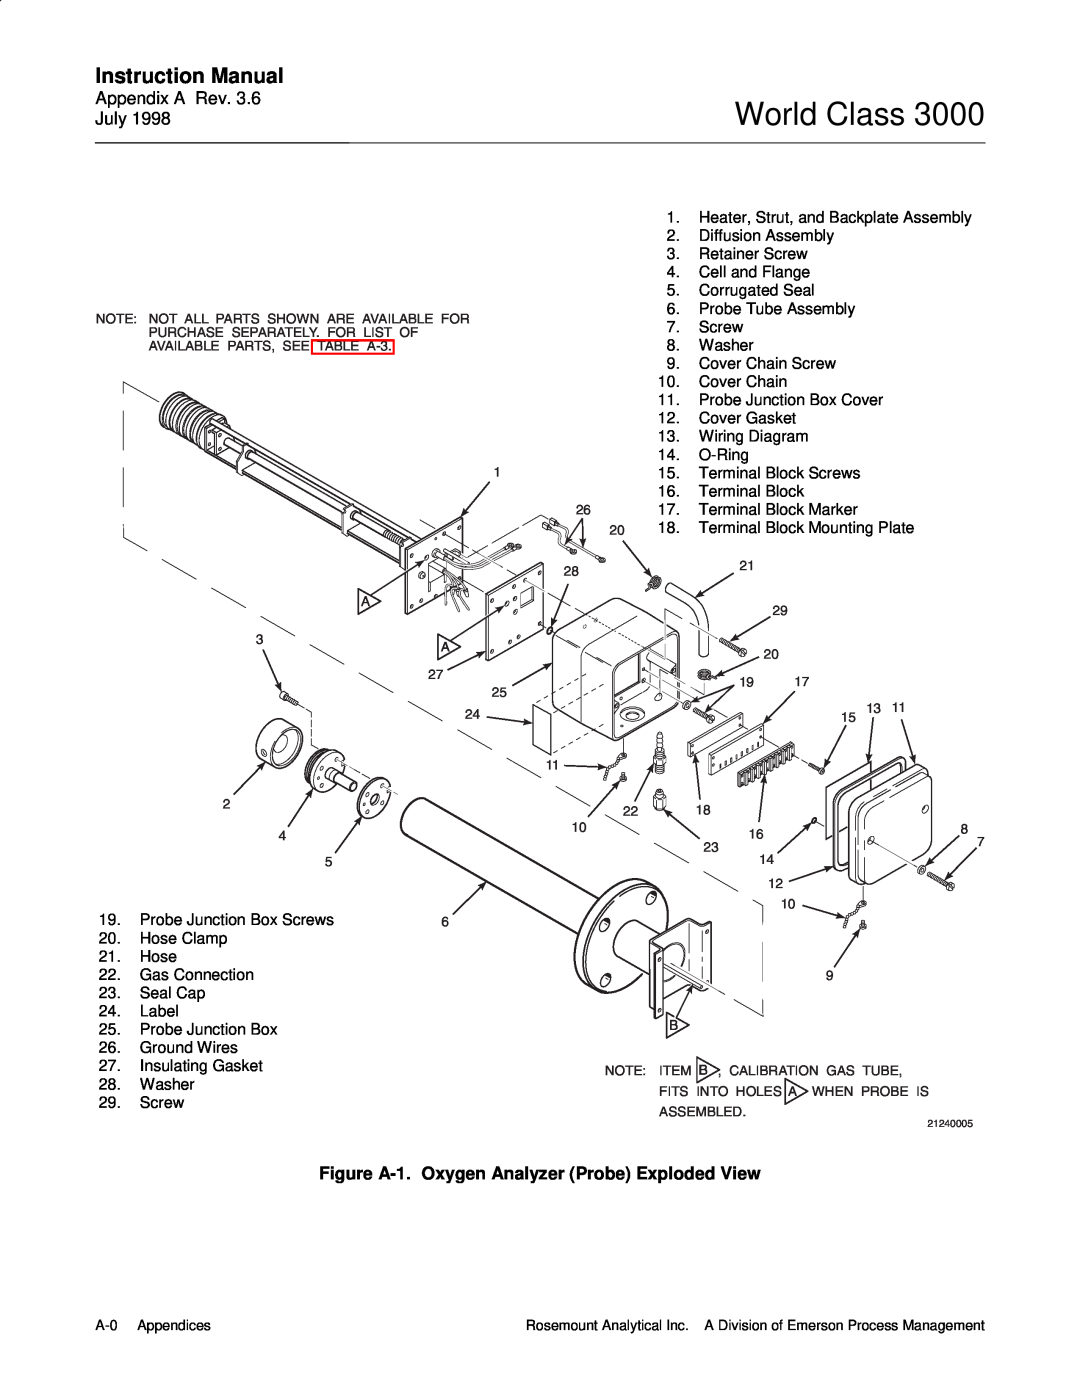 Emerson 3000 manual World Class, Appendix A, Figure A-1.Oxygen Analyzer Probe Exploded View 